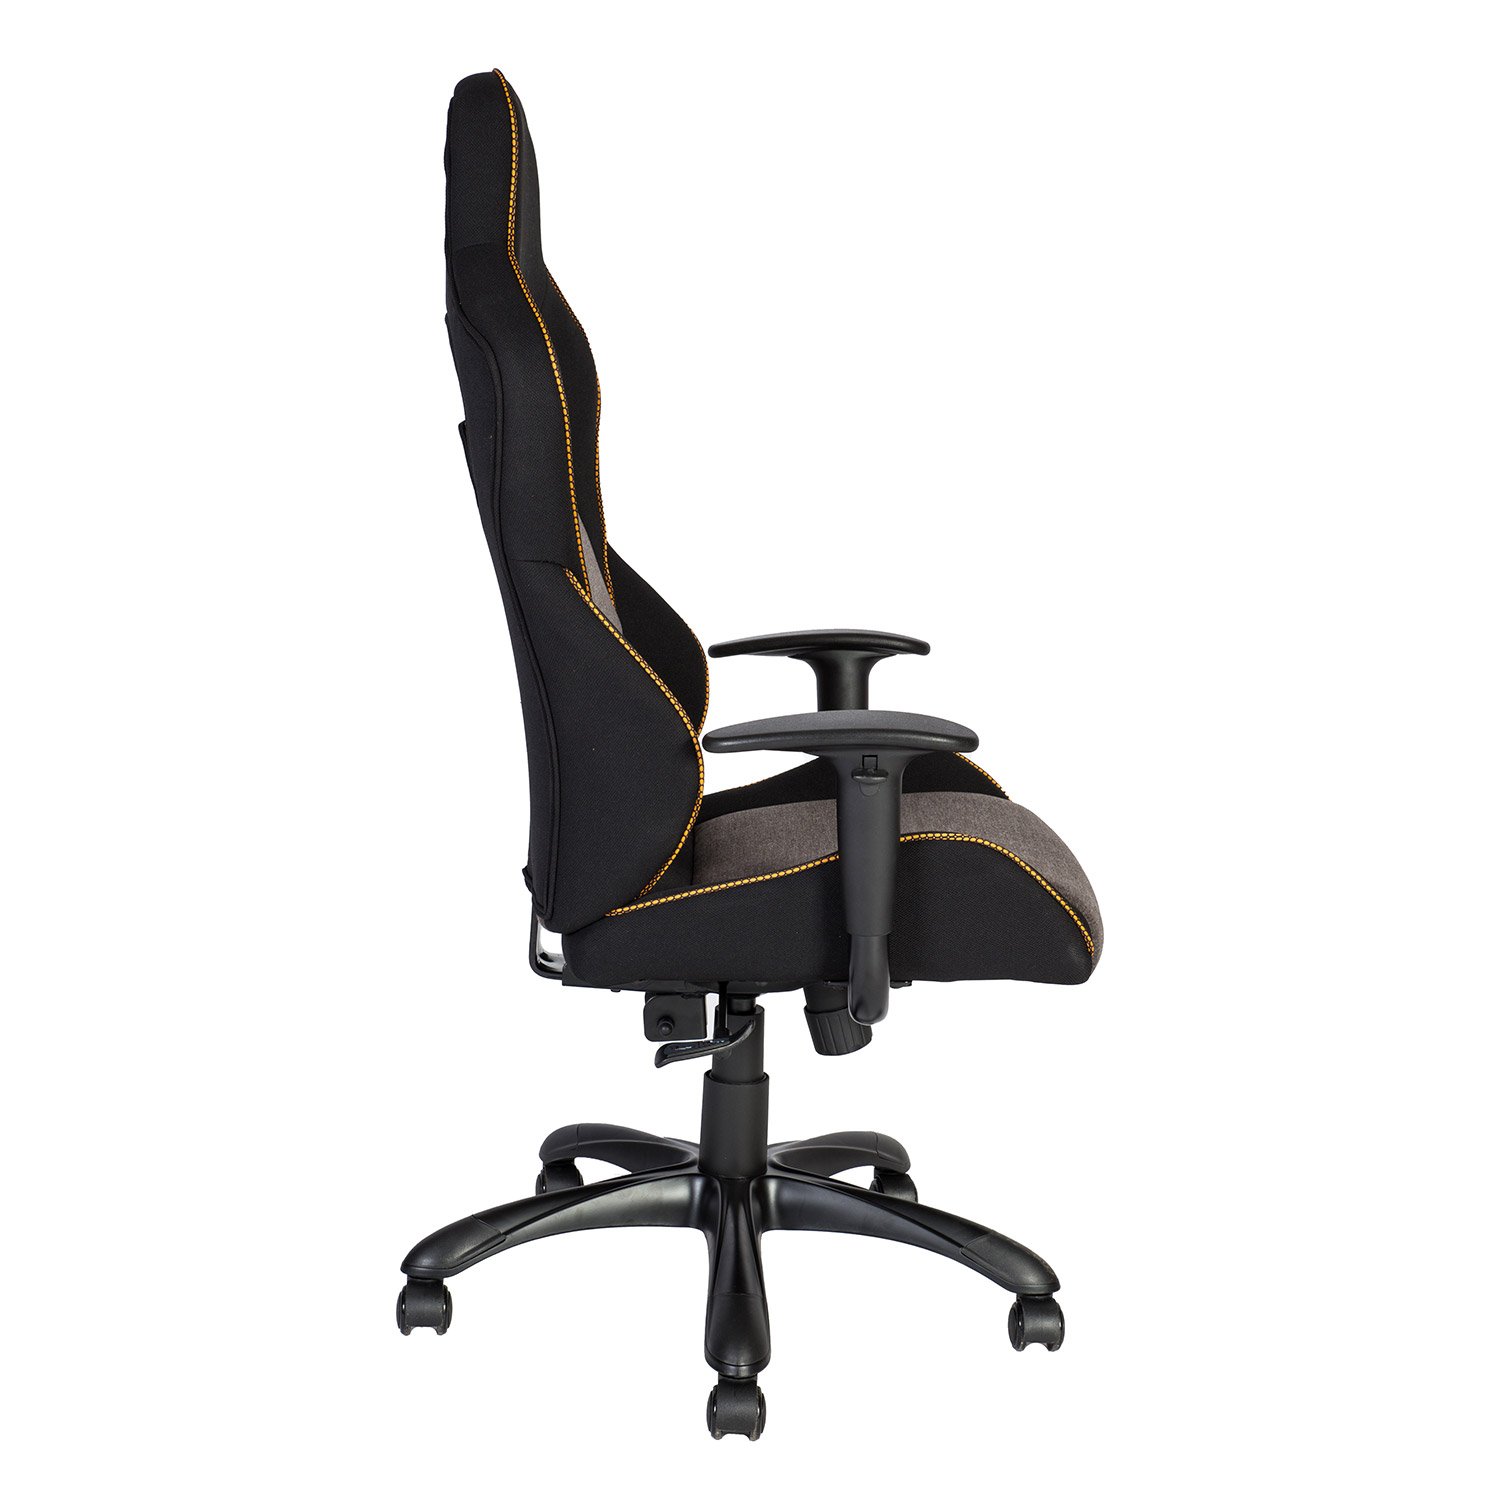 Biuro kėdė COMFORT 69x68xH120-130 cm, juoda/pilka - 2